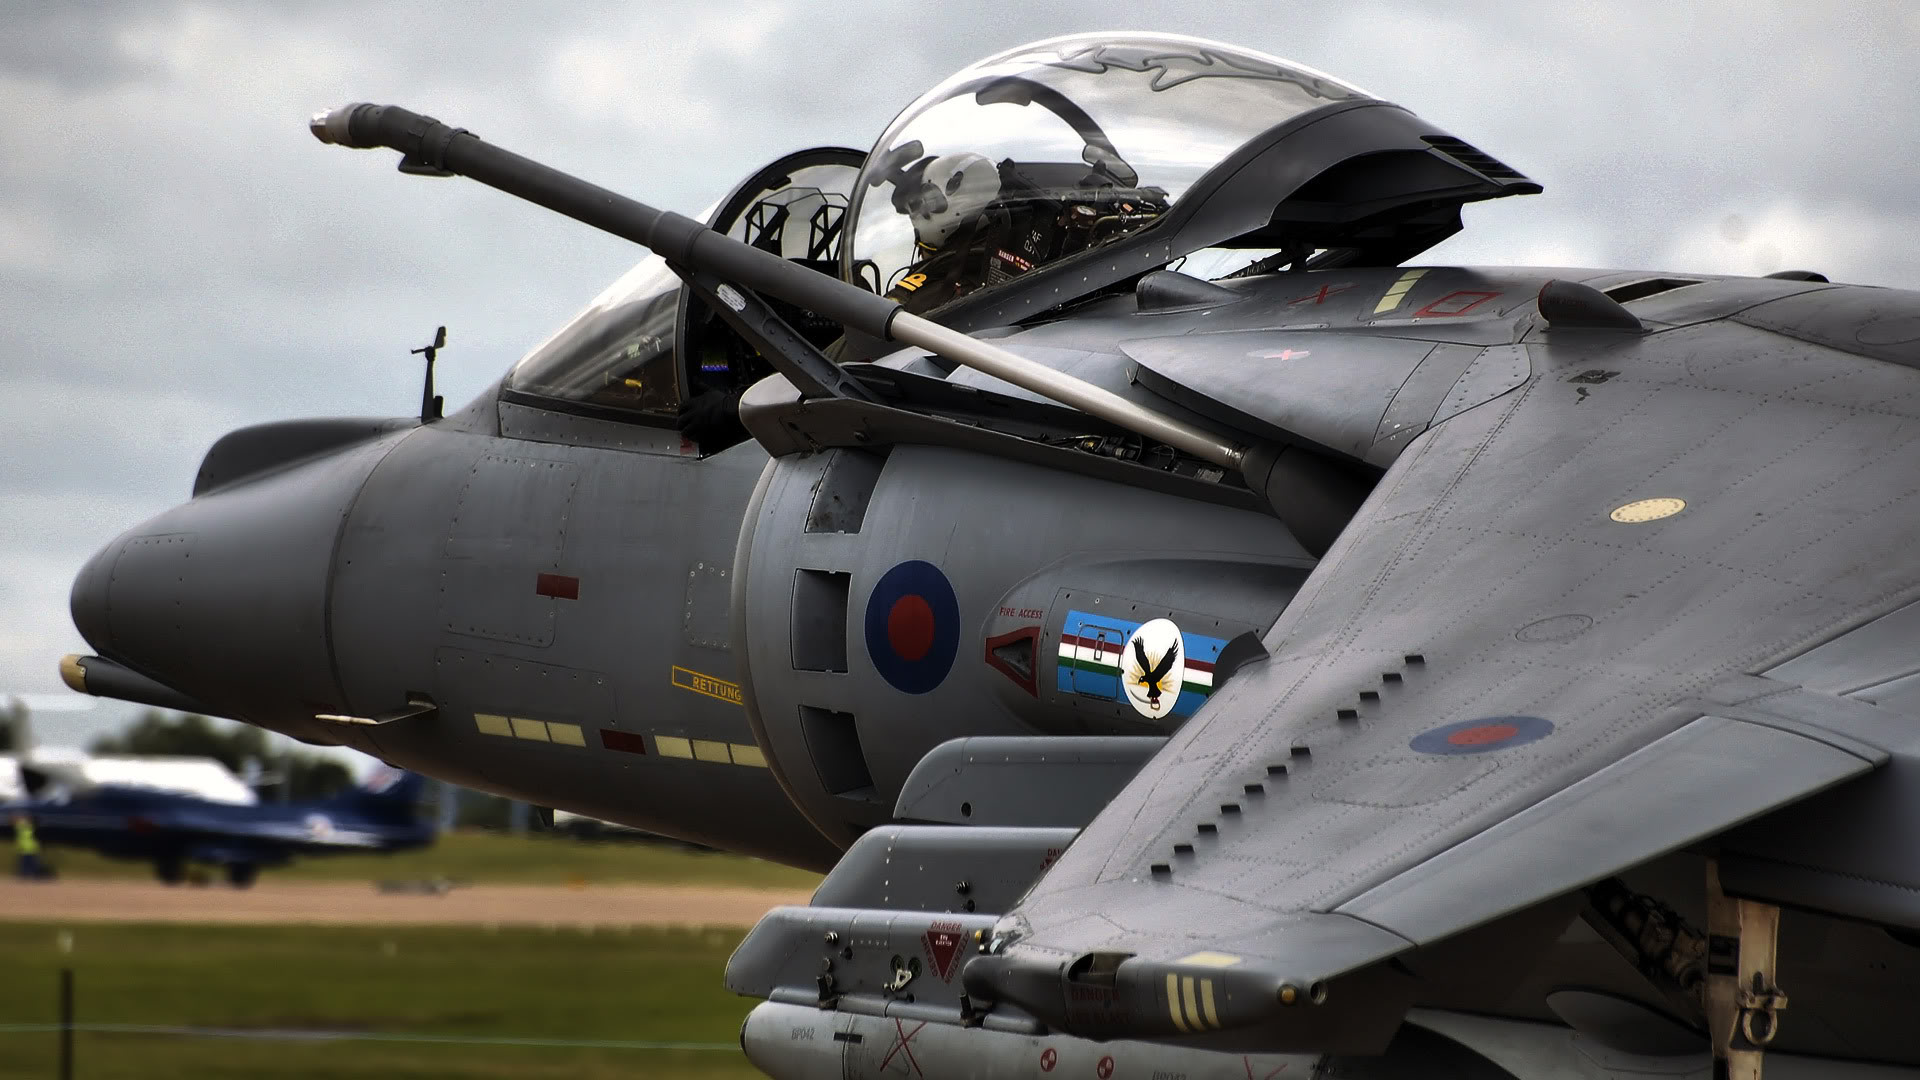 British Aerospace Harrier II Backgrounds, Compatible - PC, Mobile, Gadgets| 1920x1080 px